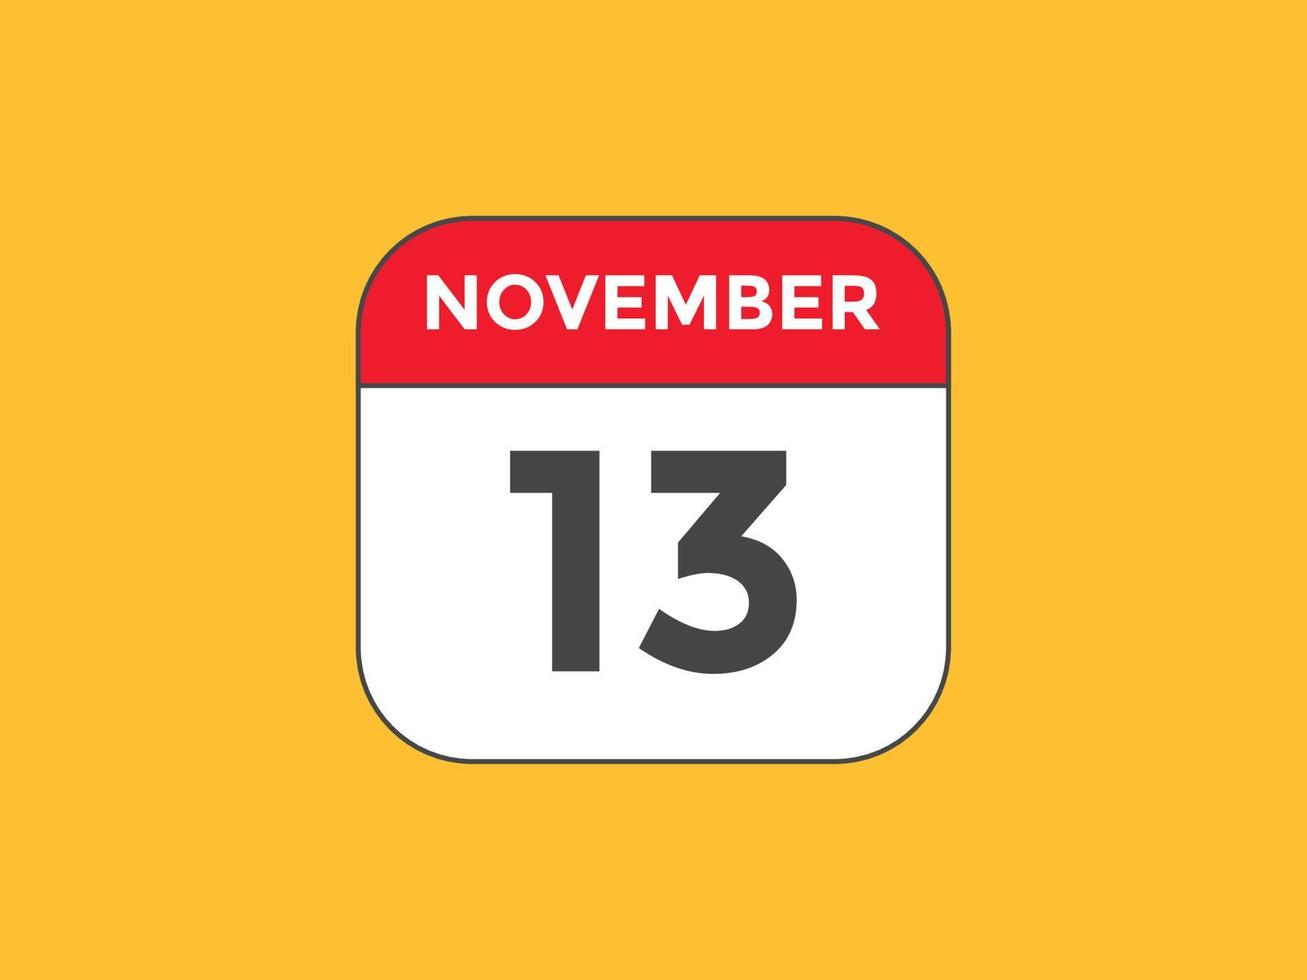 november 13 kalender herinnering. 13e november dagelijks kalender icoon sjabloon. kalender 13e november icoon ontwerp sjabloon. vector illustratie